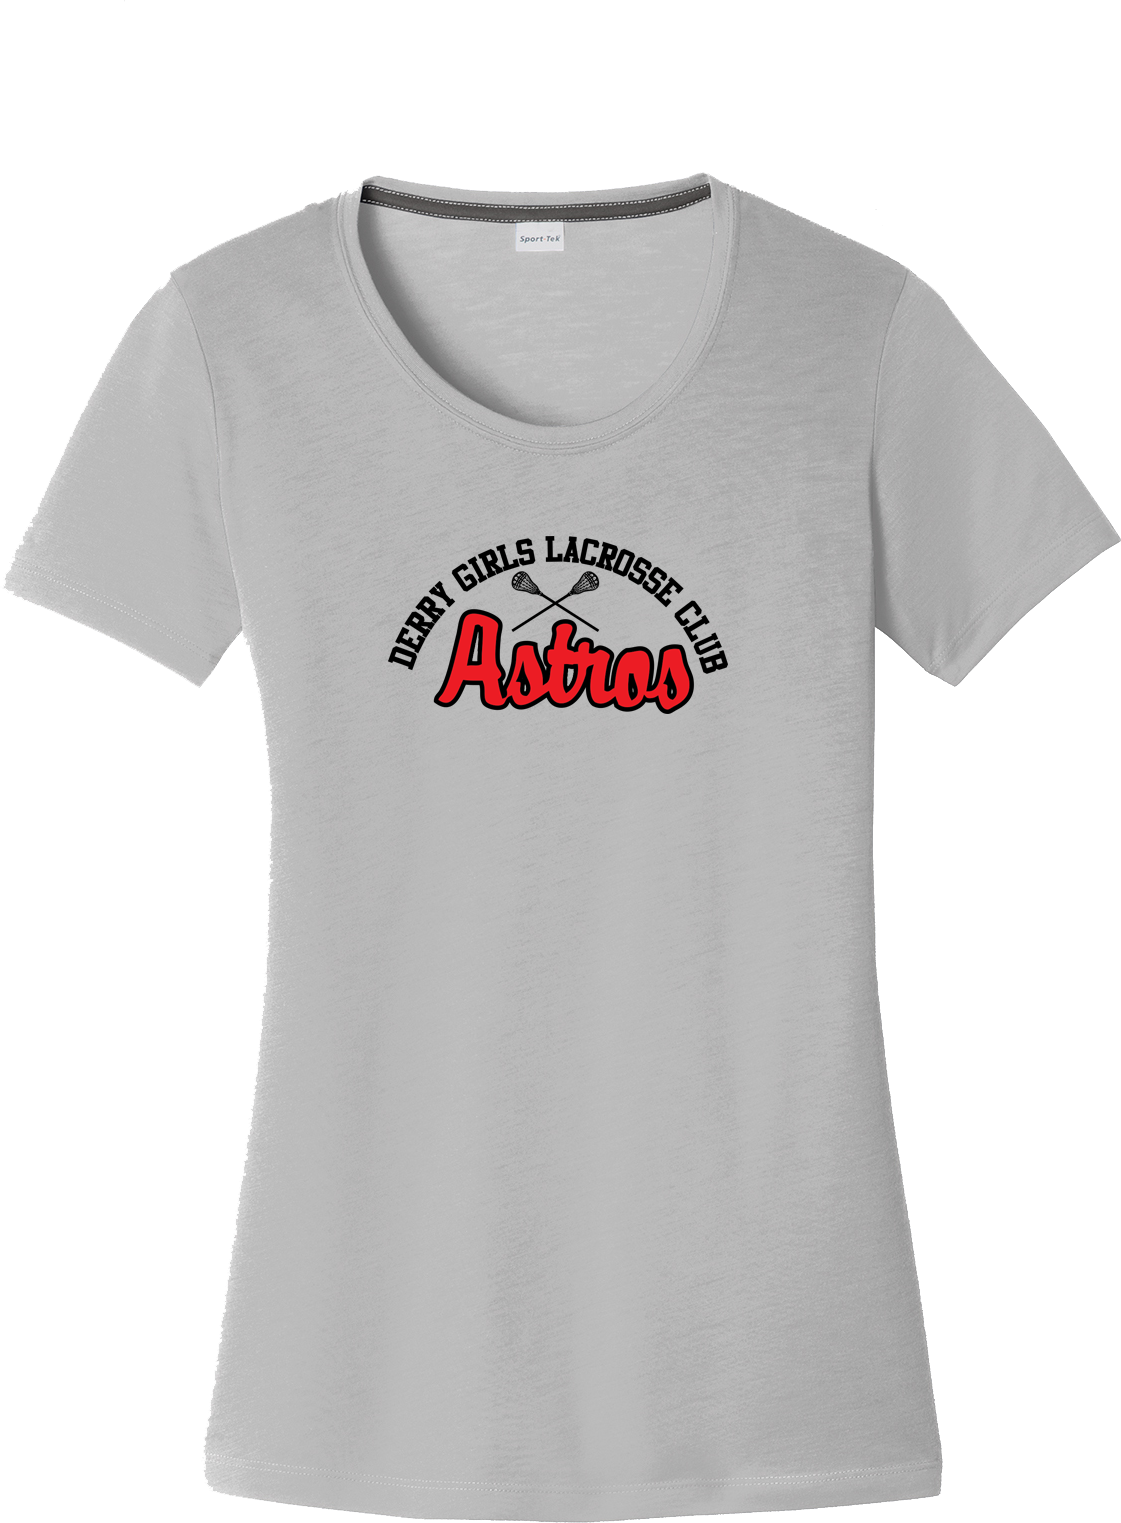 Derry Girls Lacrosse Women's Silver CottonTouch Performance T-Shirt